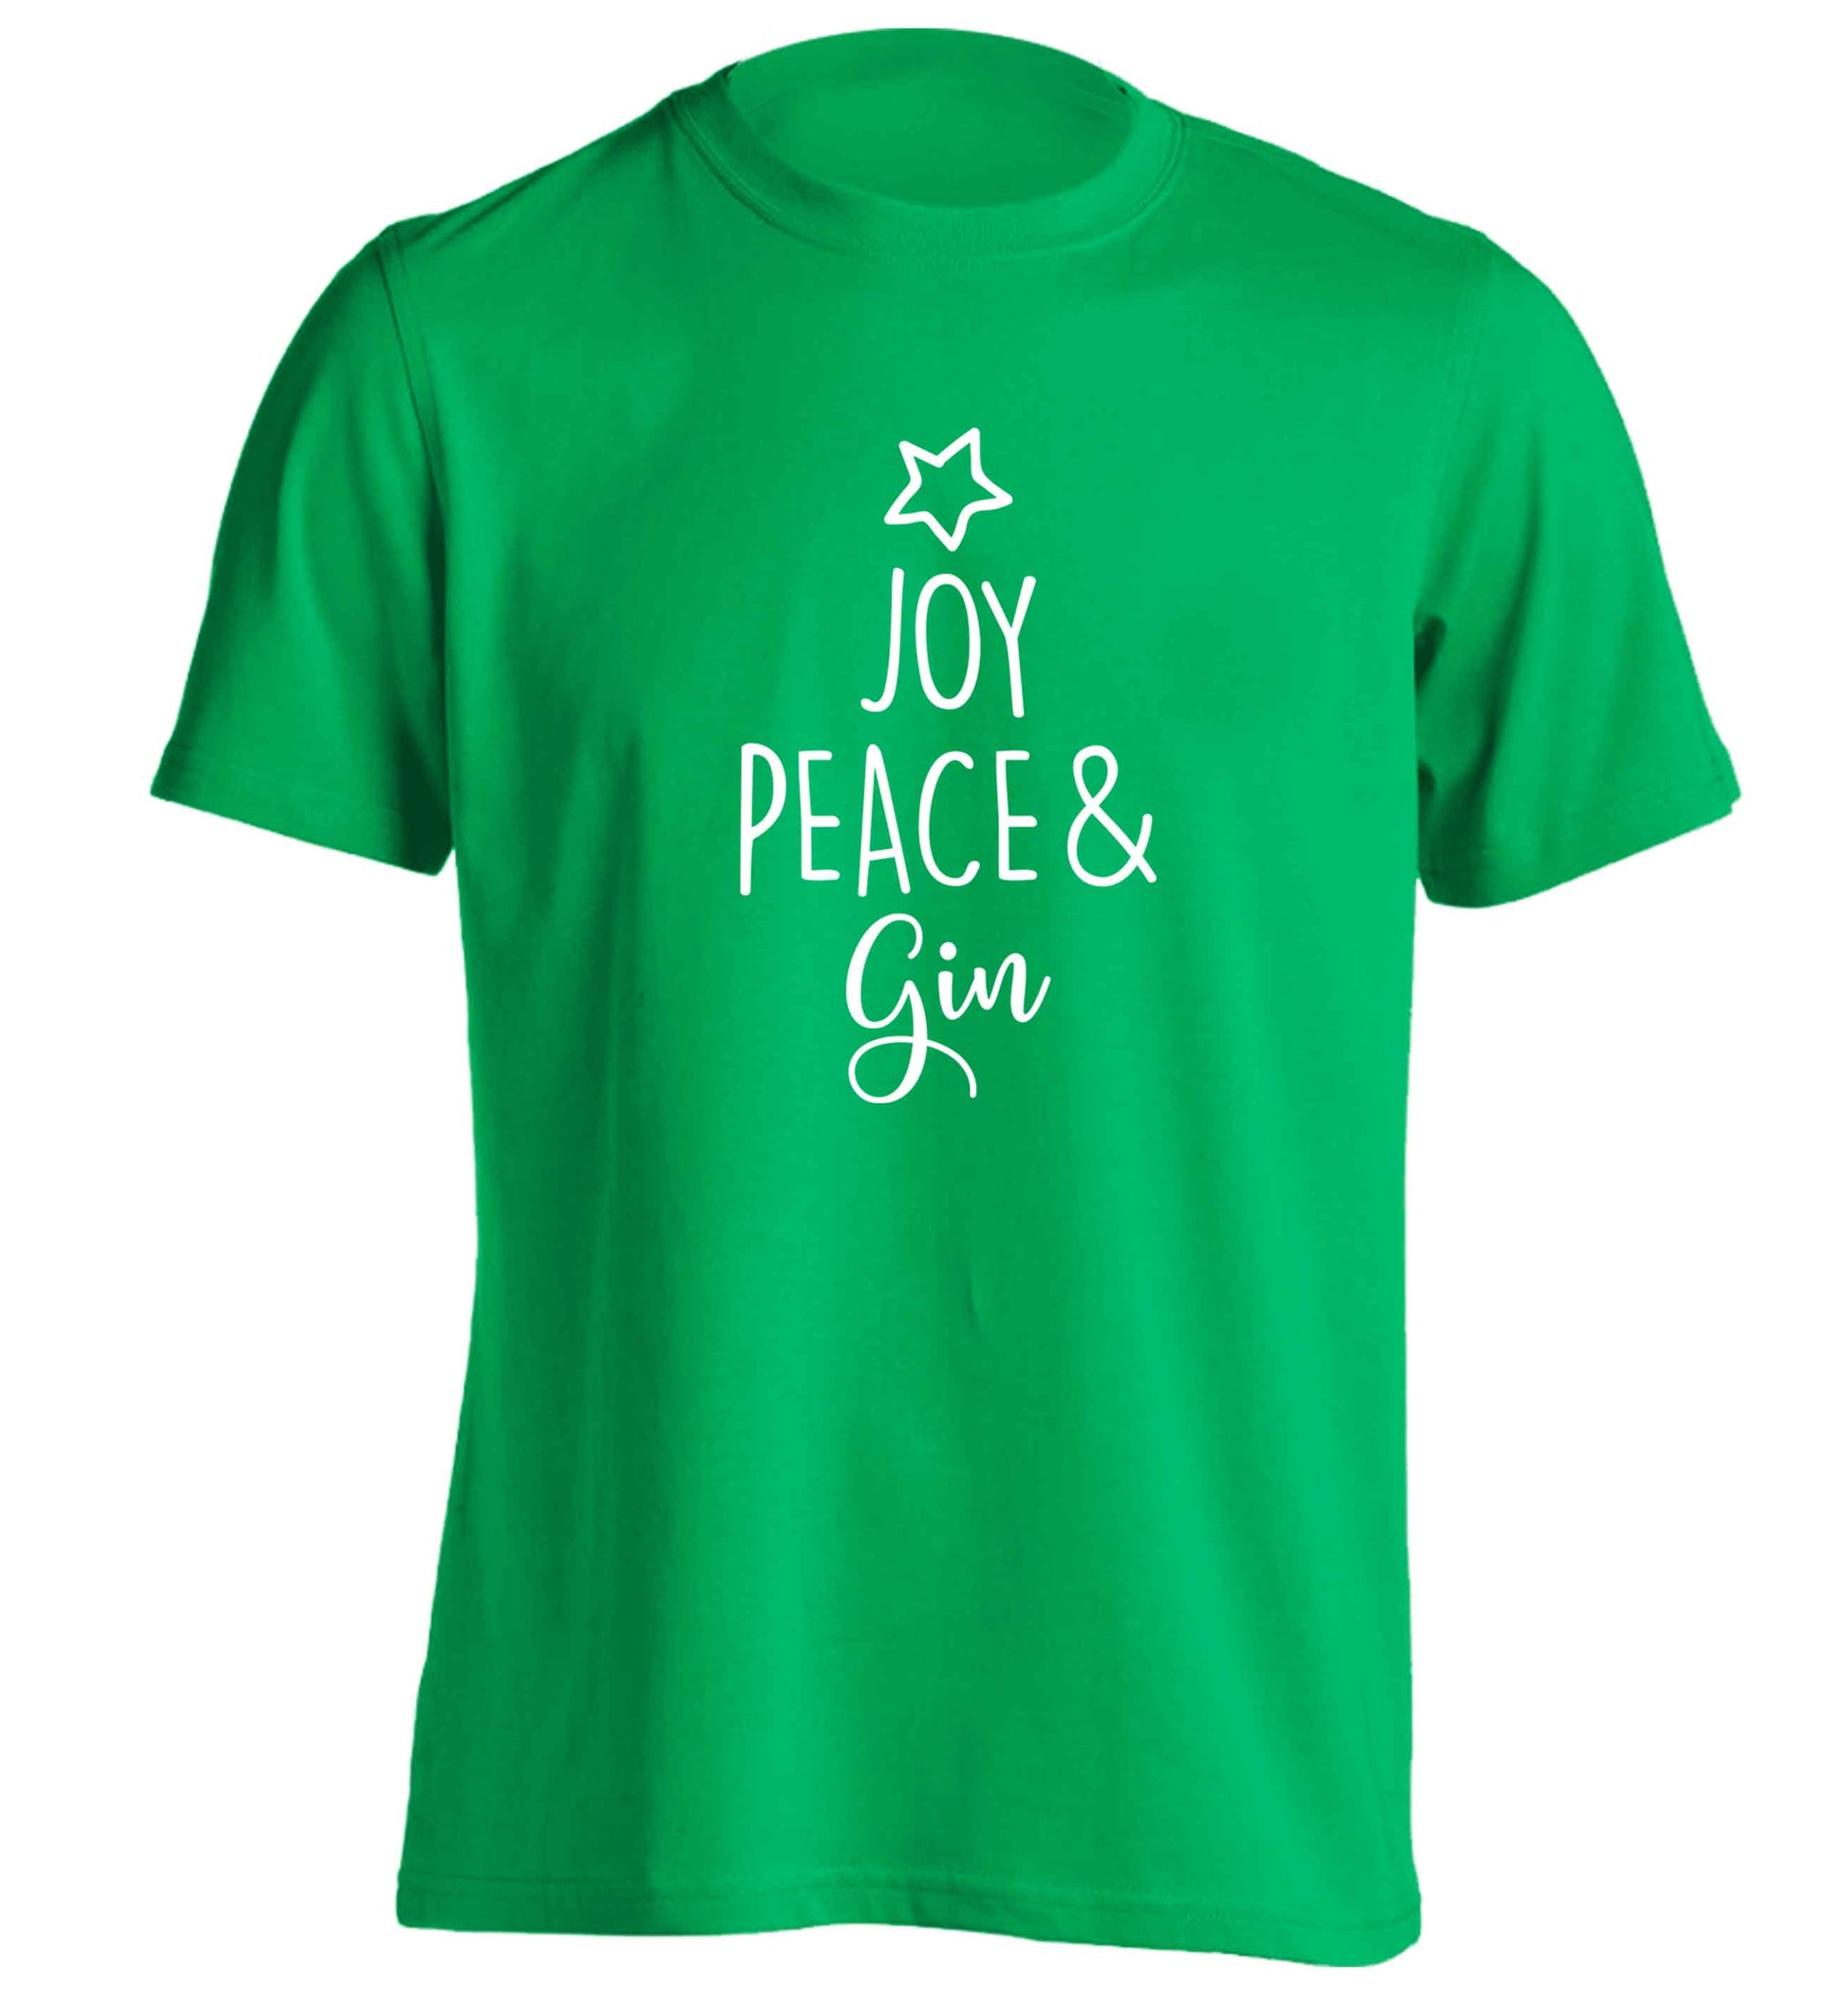 Joy peace and gin adults unisex green Tshirt 2XL